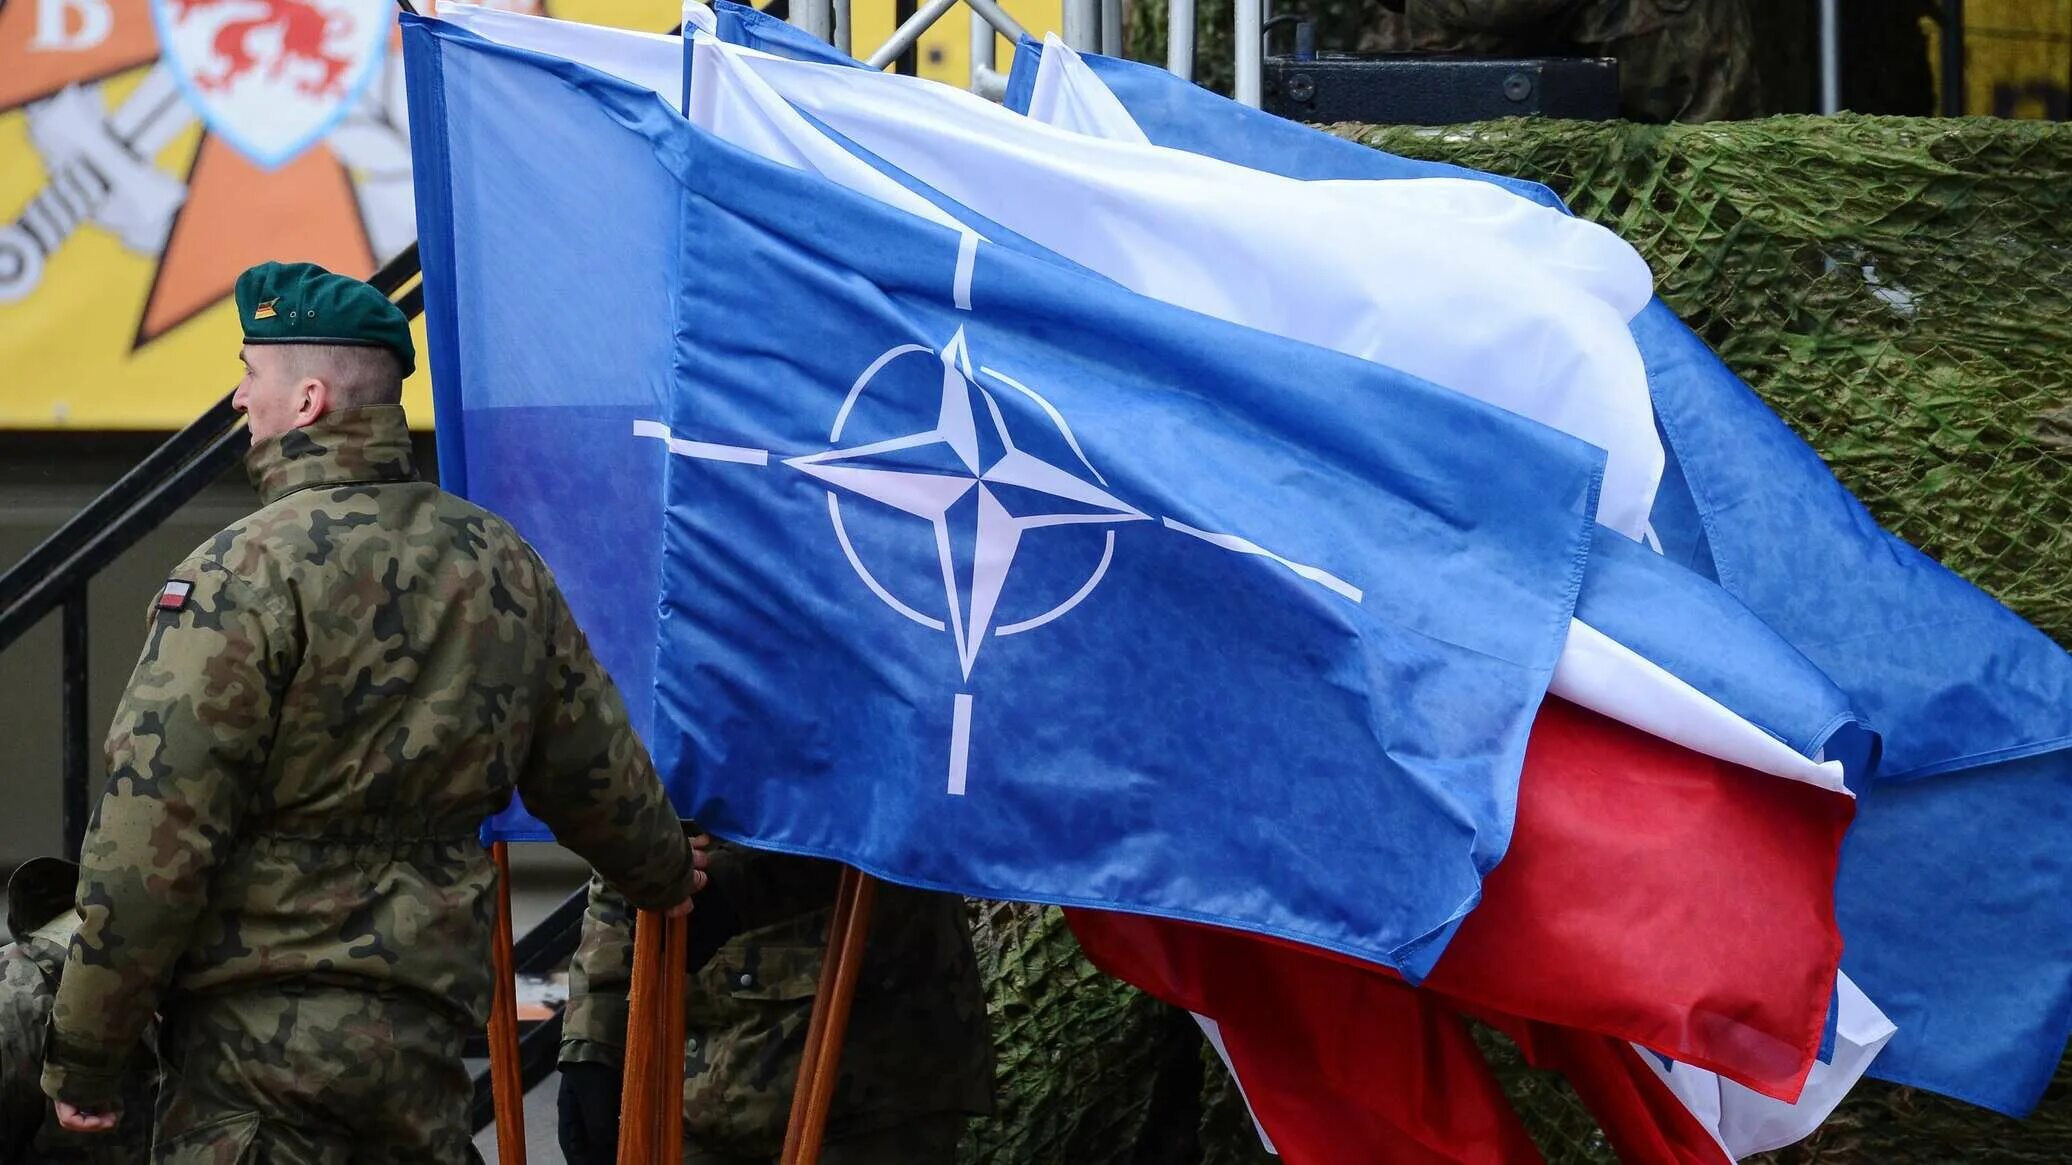 Нато нападет на украину. Украина РФ НАТО флаг. Швеция и Финляндия вступление в НАТО. НАТО И Россия. Миротворцы НАТО.